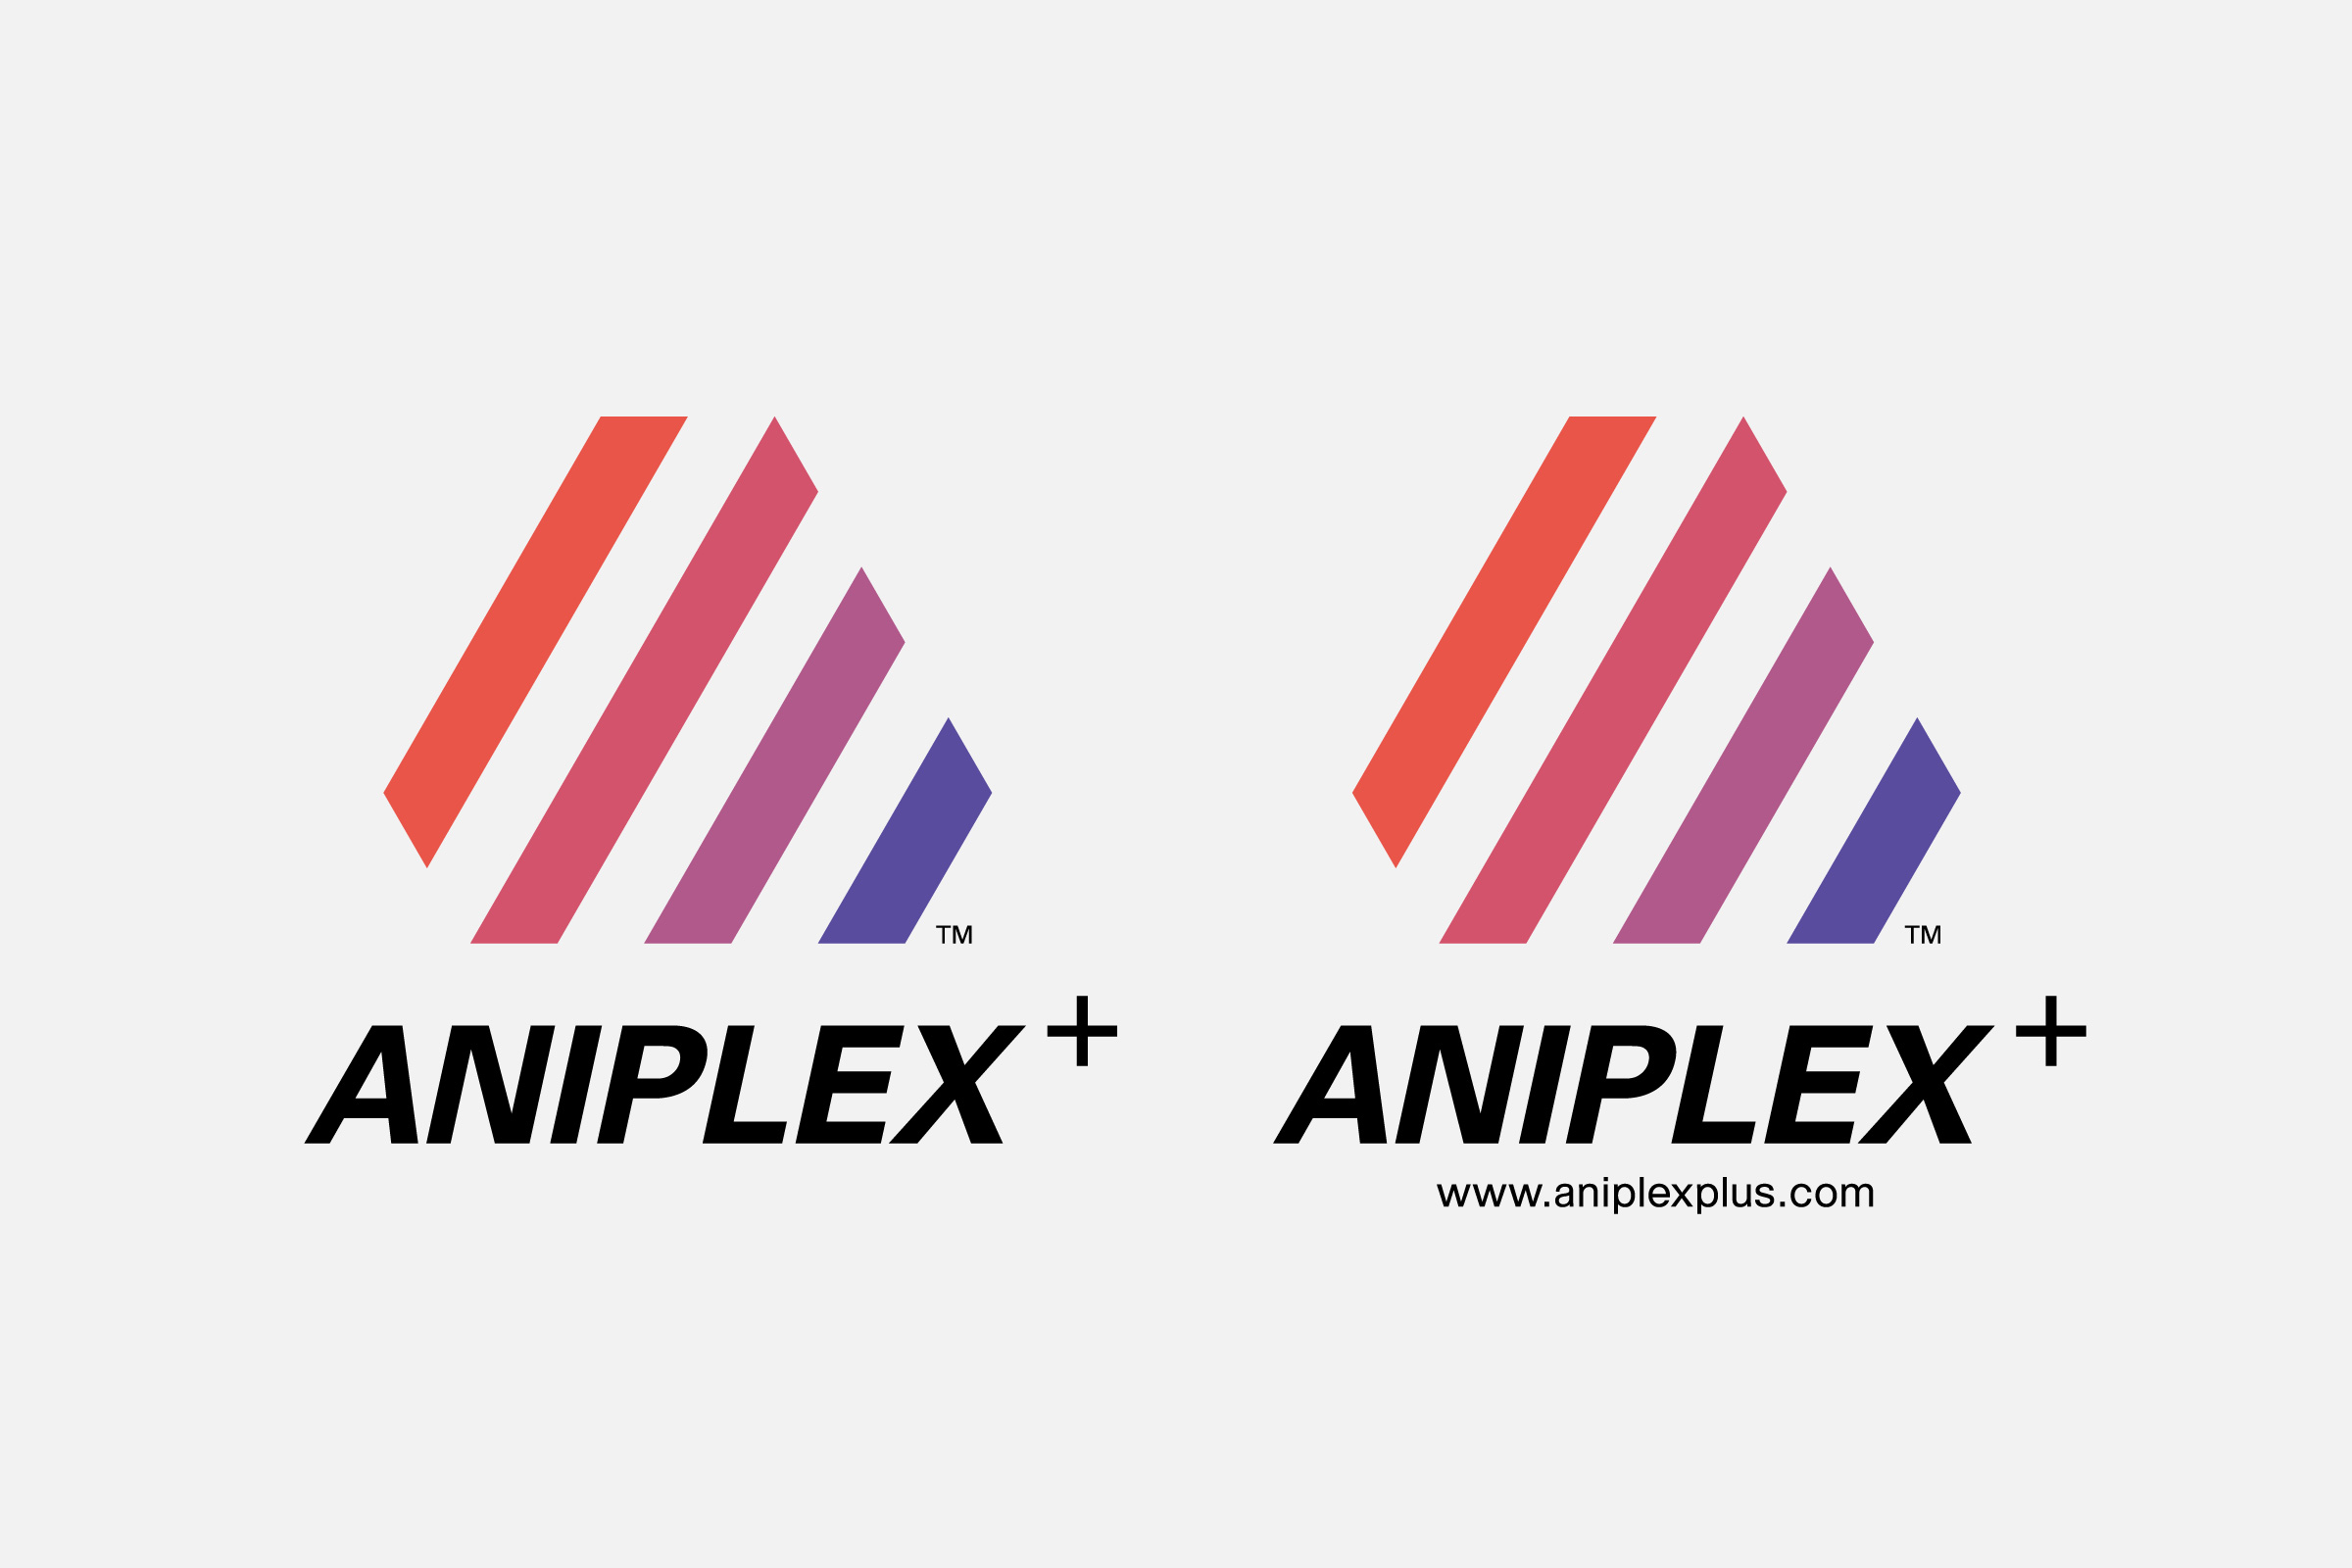 Aniplex Plus